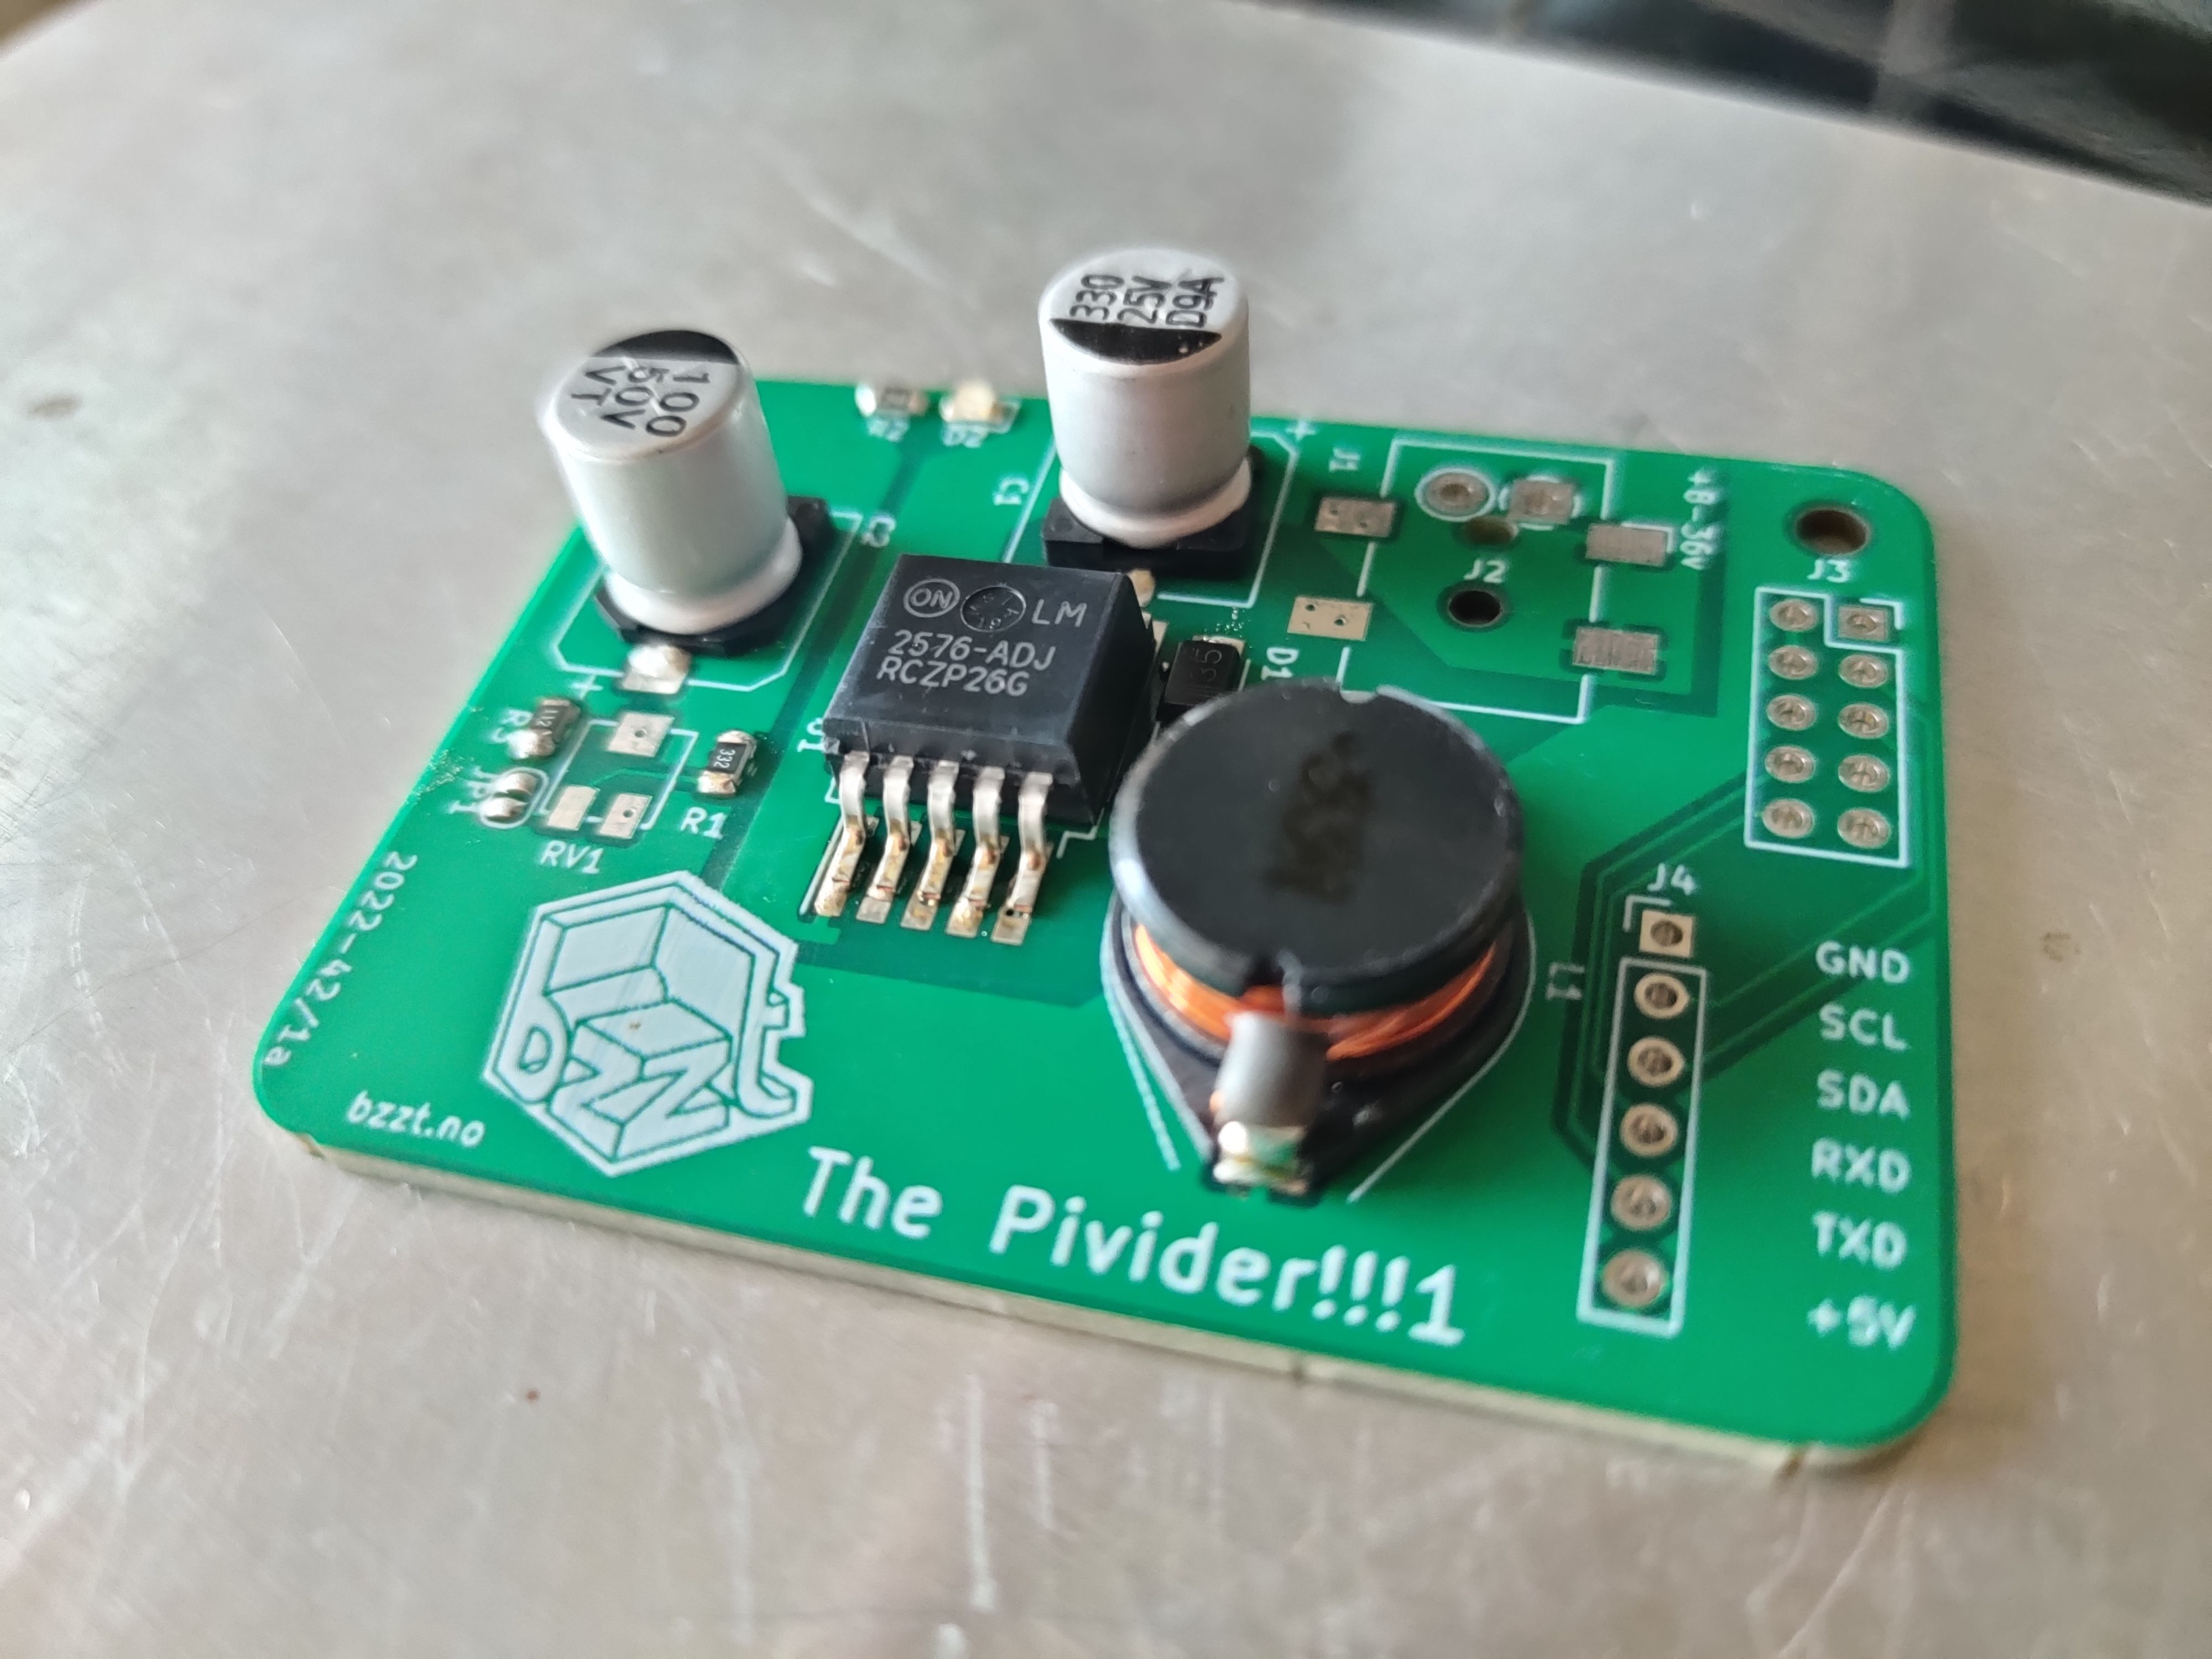 PCB soldered